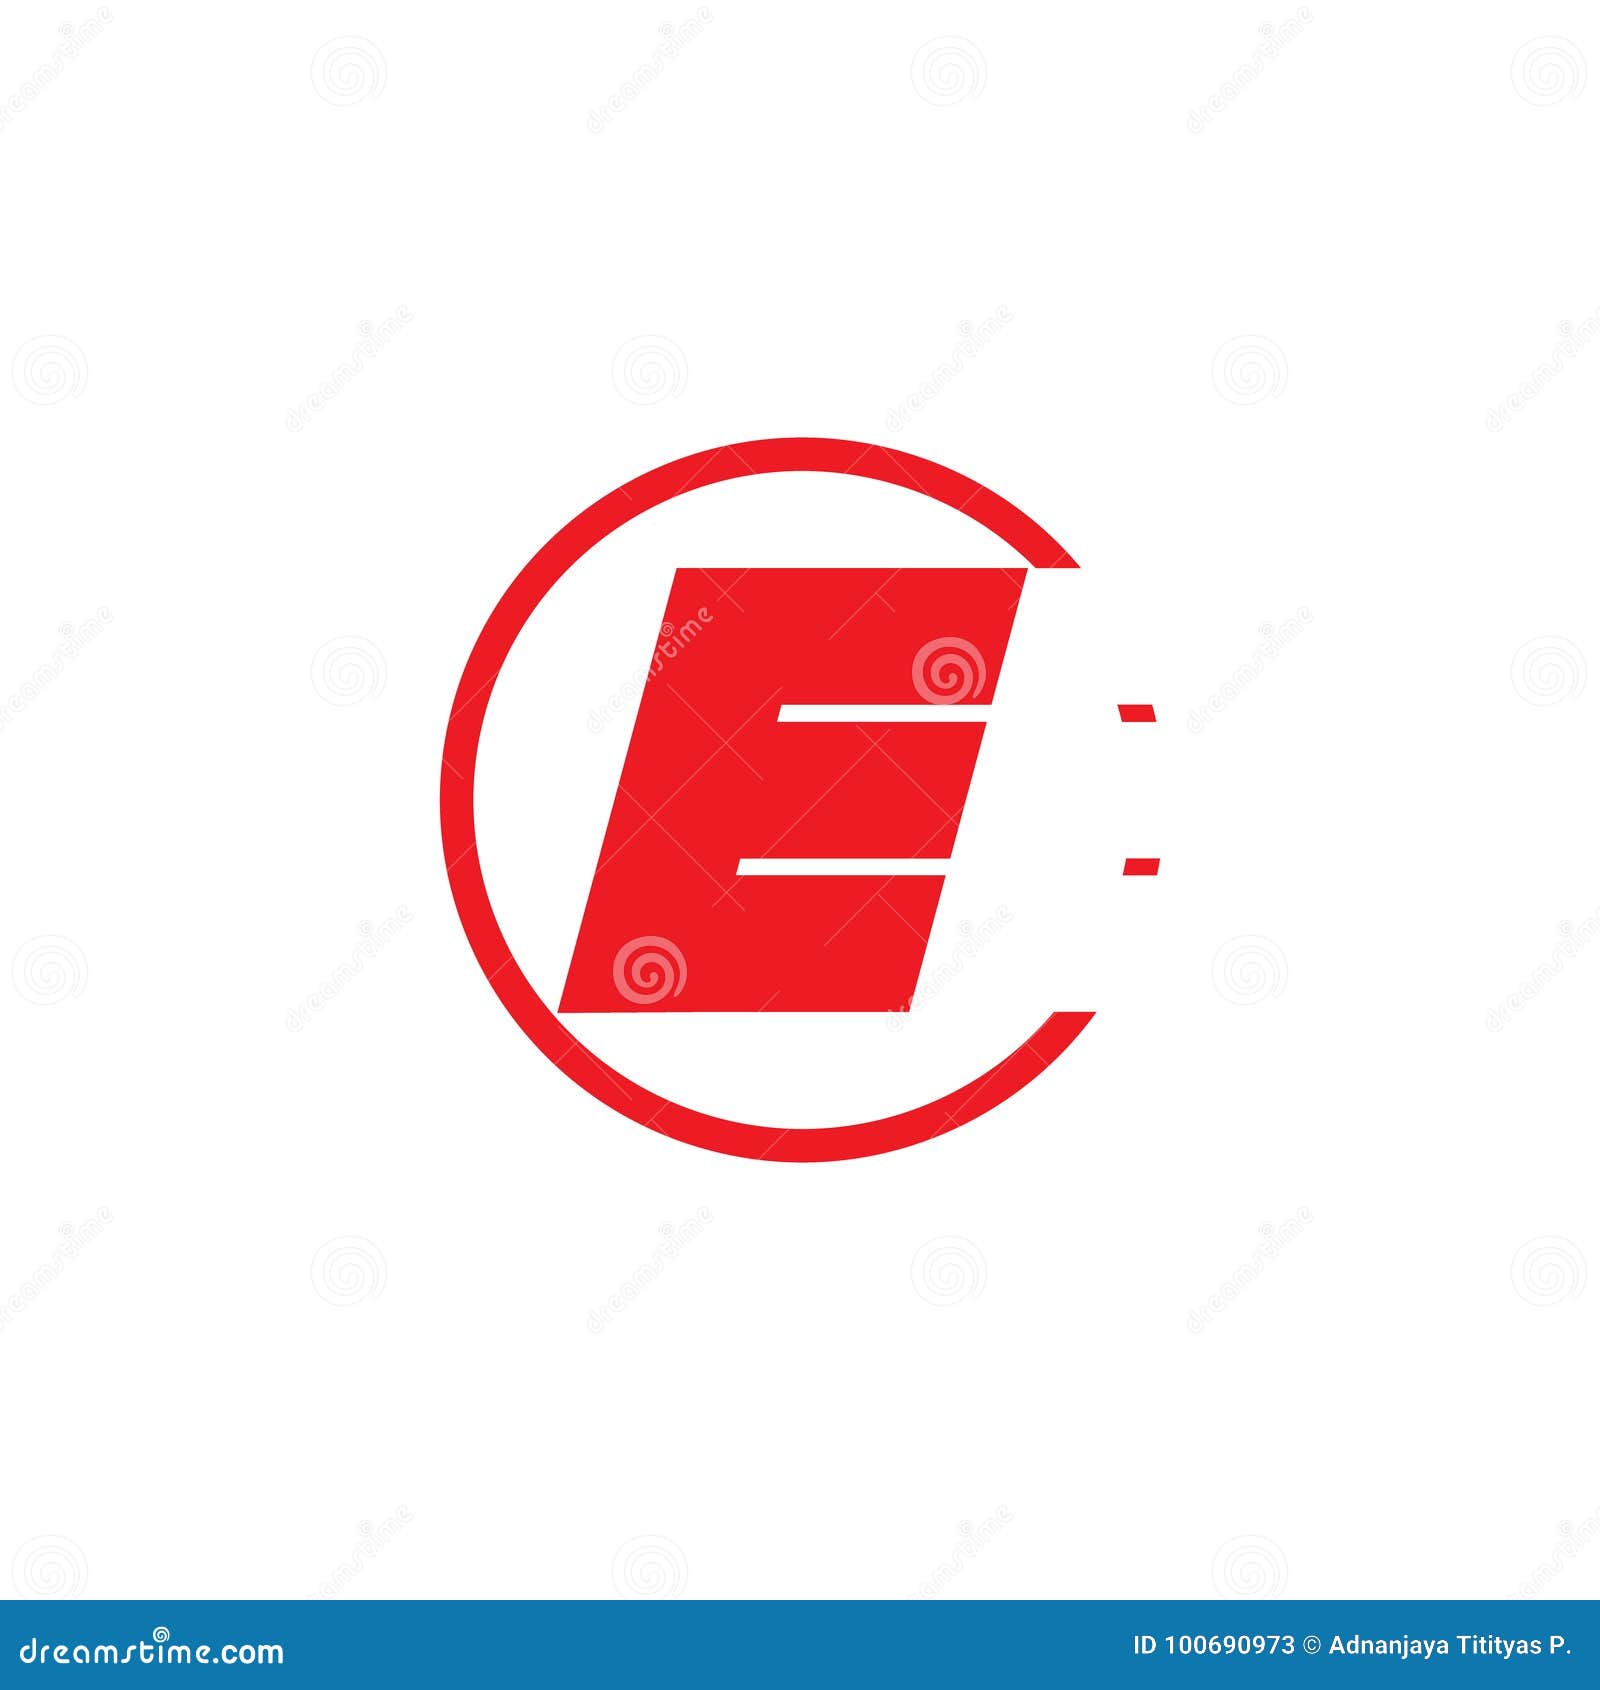 Letter e in circle logo stock vector. Illustration of element - 100690973